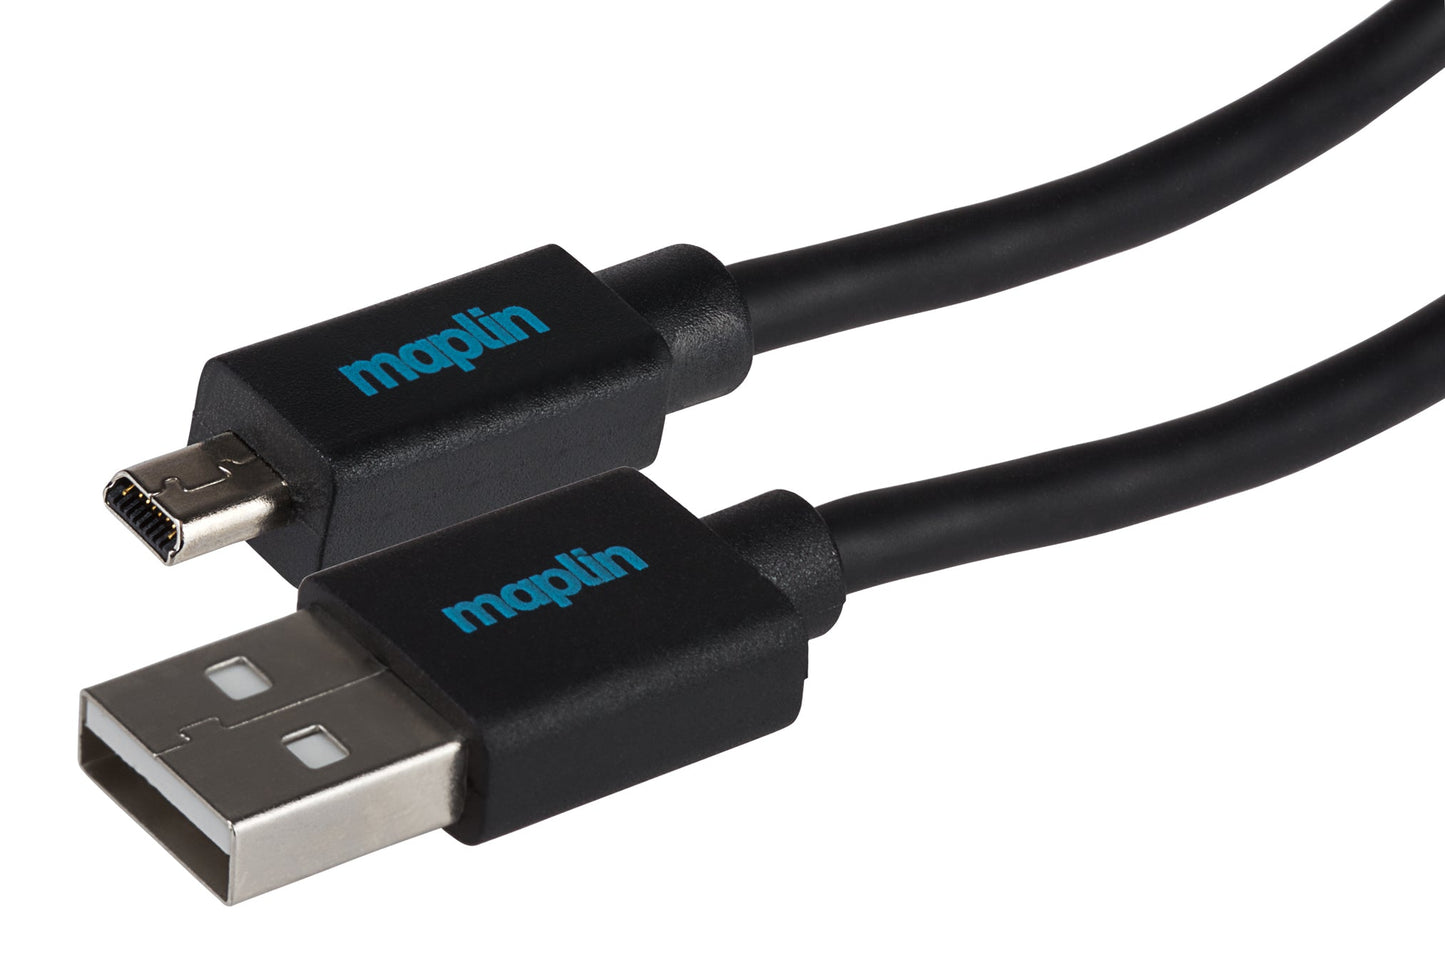 Maplin USB-A to 8-Pin Mini USB Cable for Data & Photo Transfer - Black, 3m - maplin.co.uk